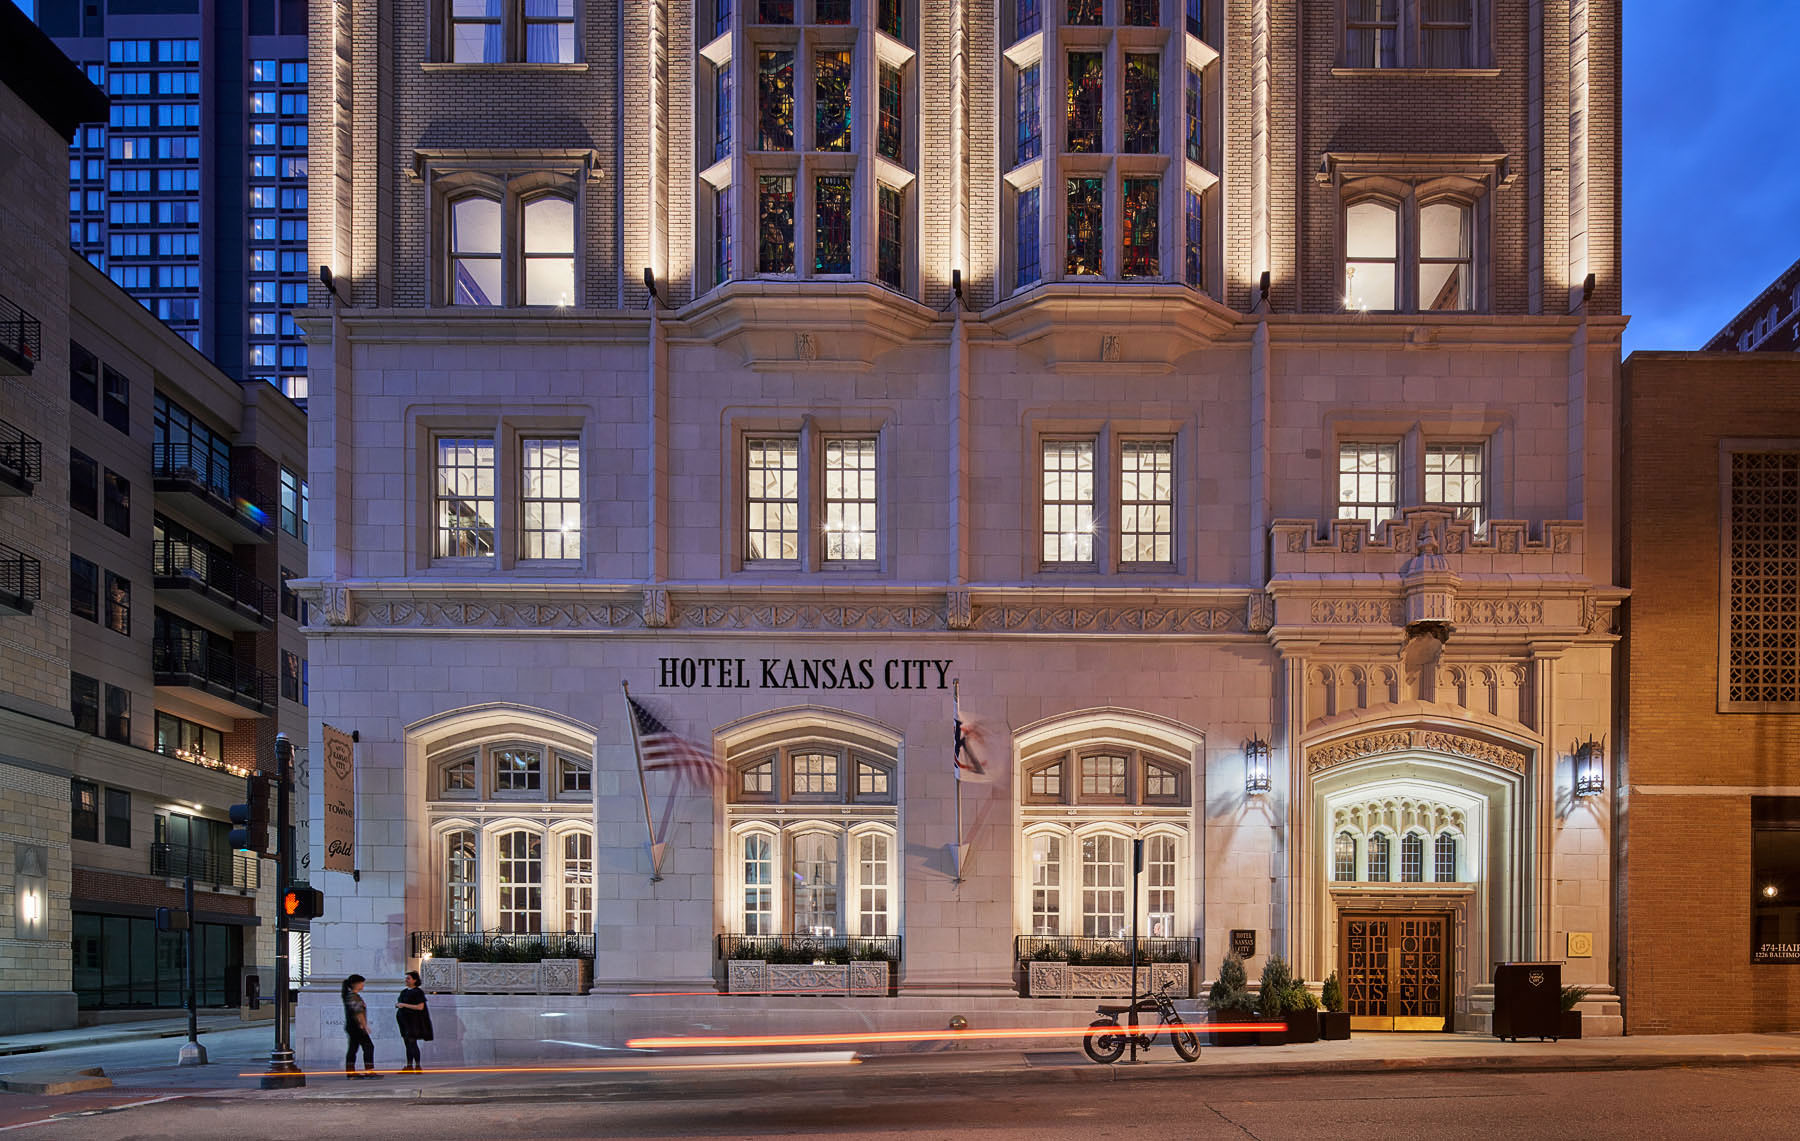 The limestone exterior of Hotel Kansas City.